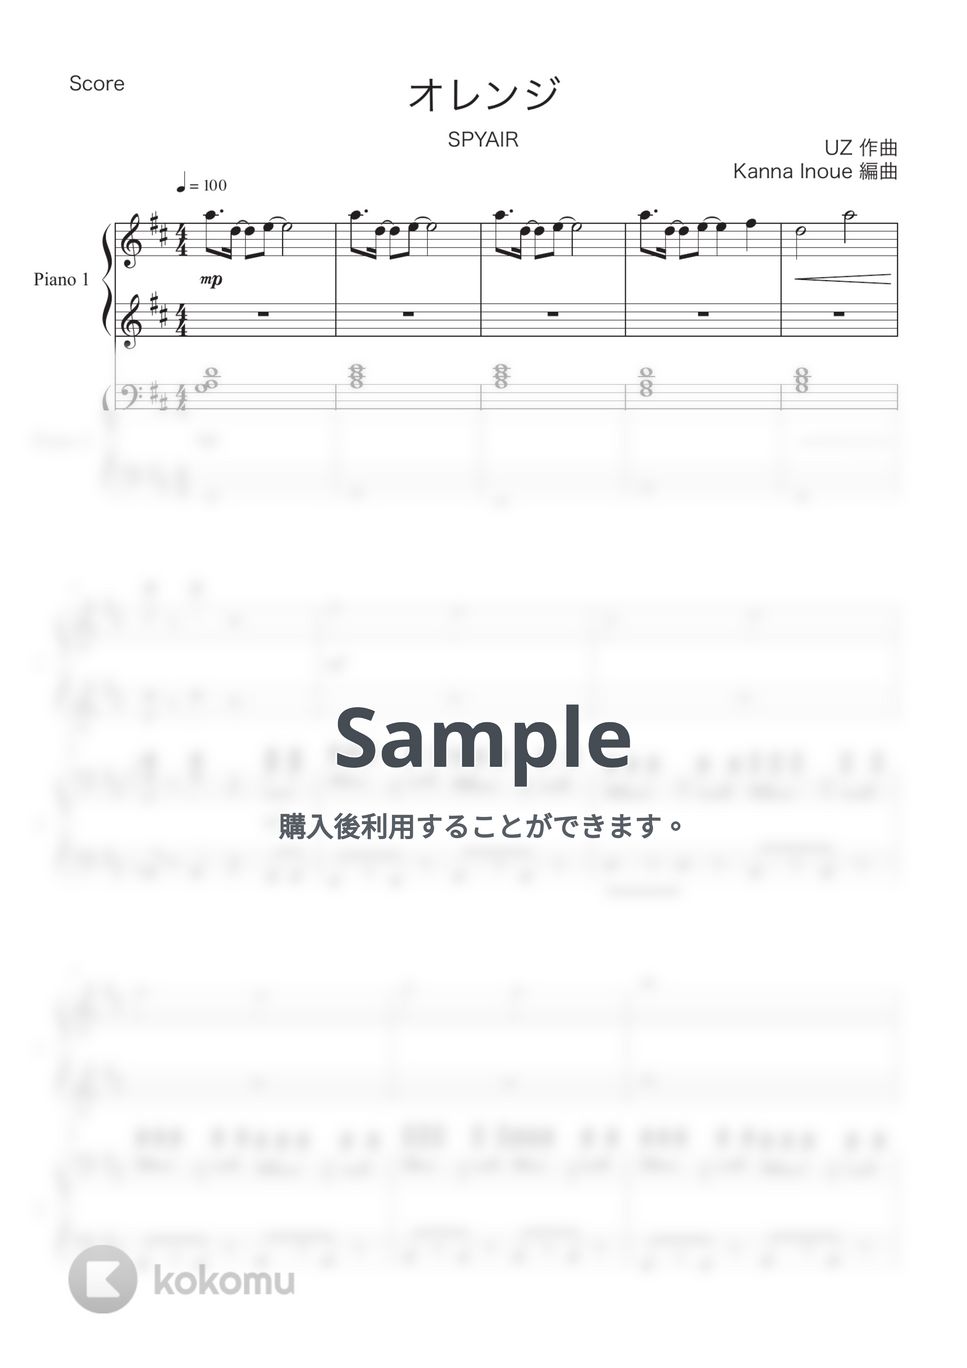 SPYAIR - オレンジ (ピアノ連弾 / 初級 / 『劇場版ハイキュー!! ゴミ捨て場の決戦』主題歌) by Kanna Inoue